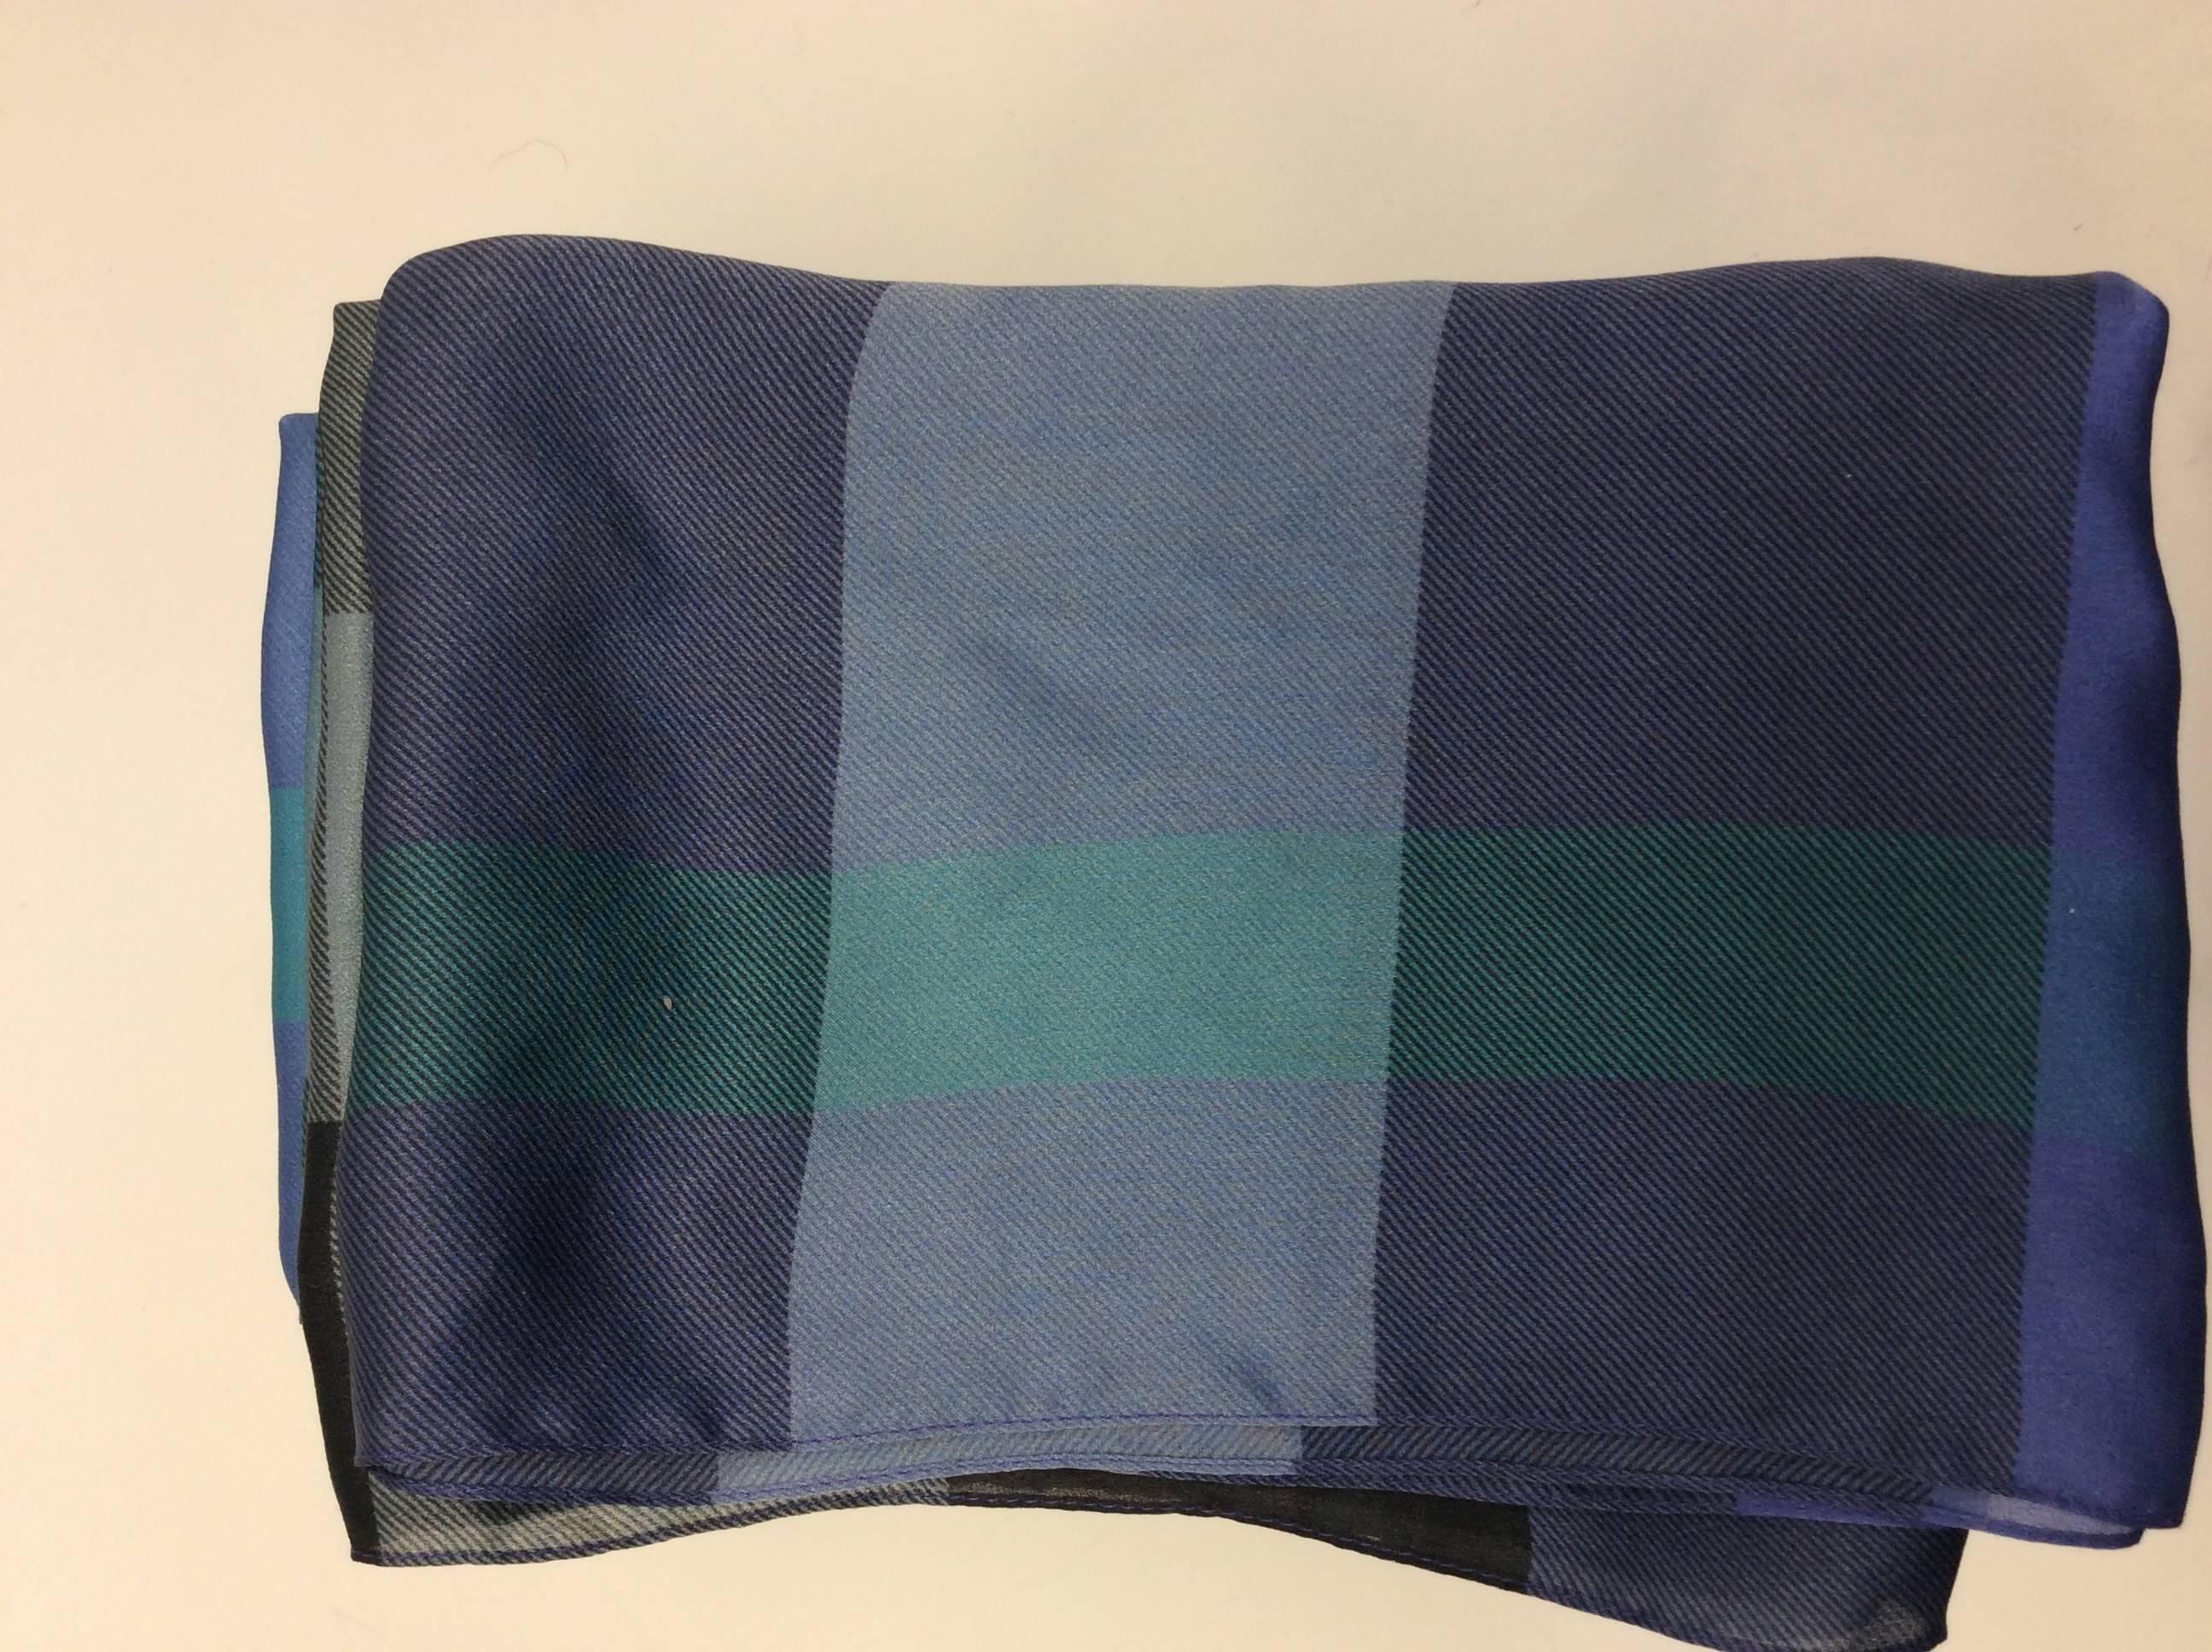 Burberry Blue Print Silk Scarf
$150
75